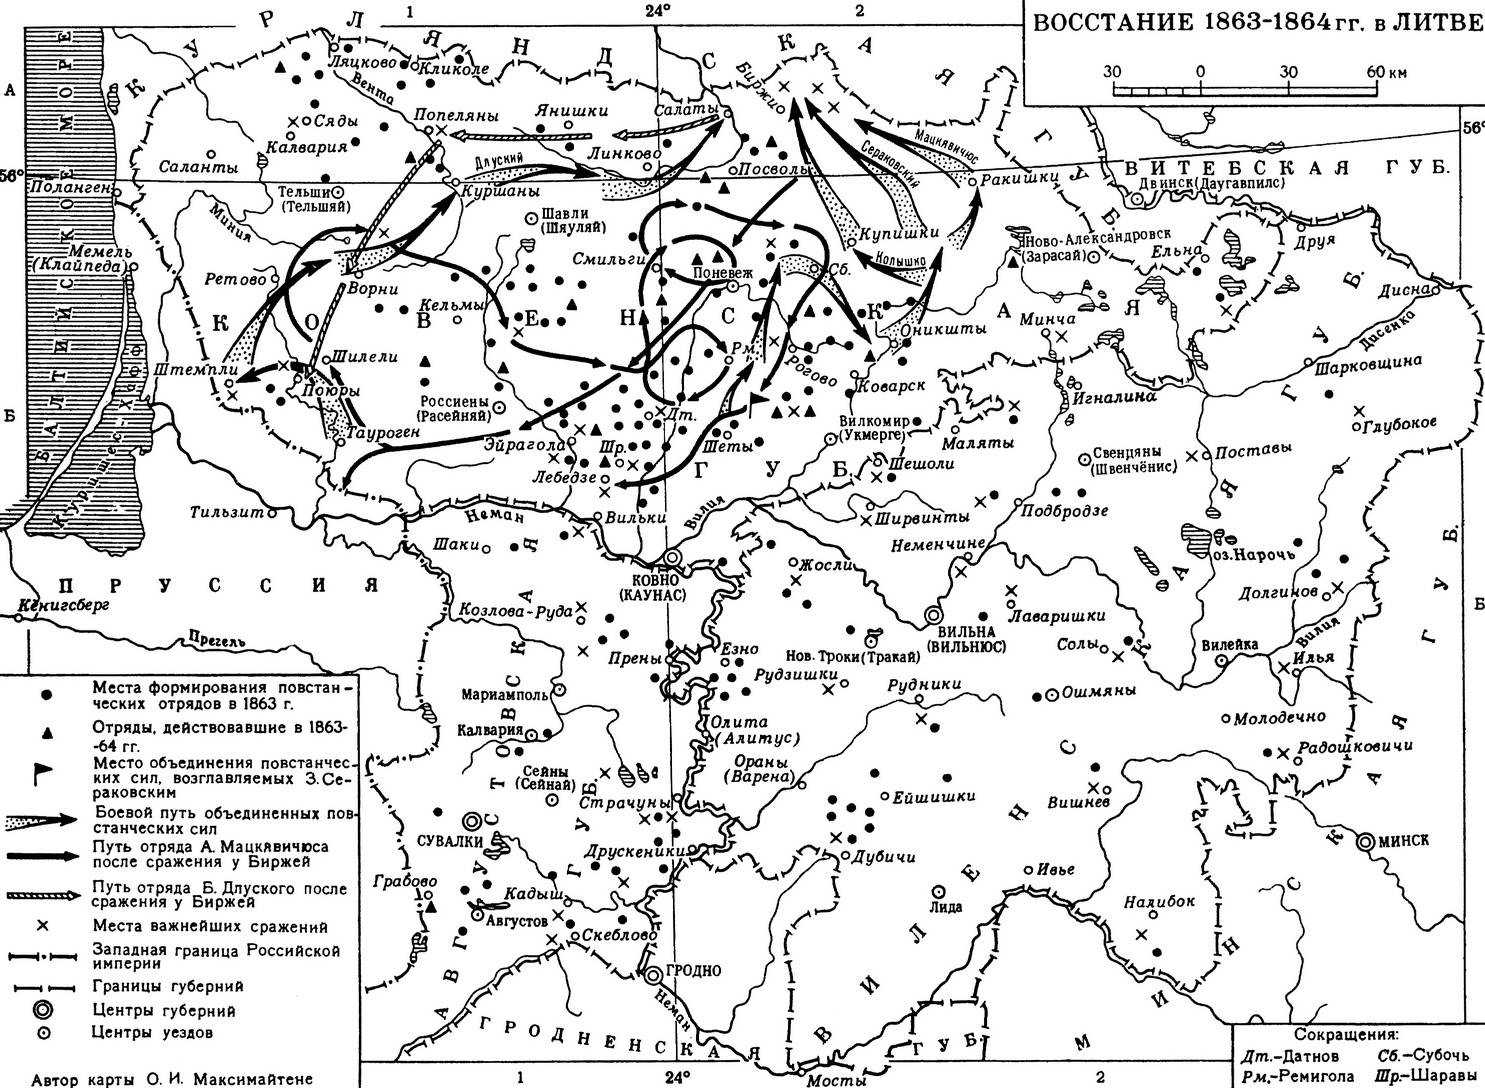 Карта восстания в Литве 1863-1864 гг., О. И. Максимайтене